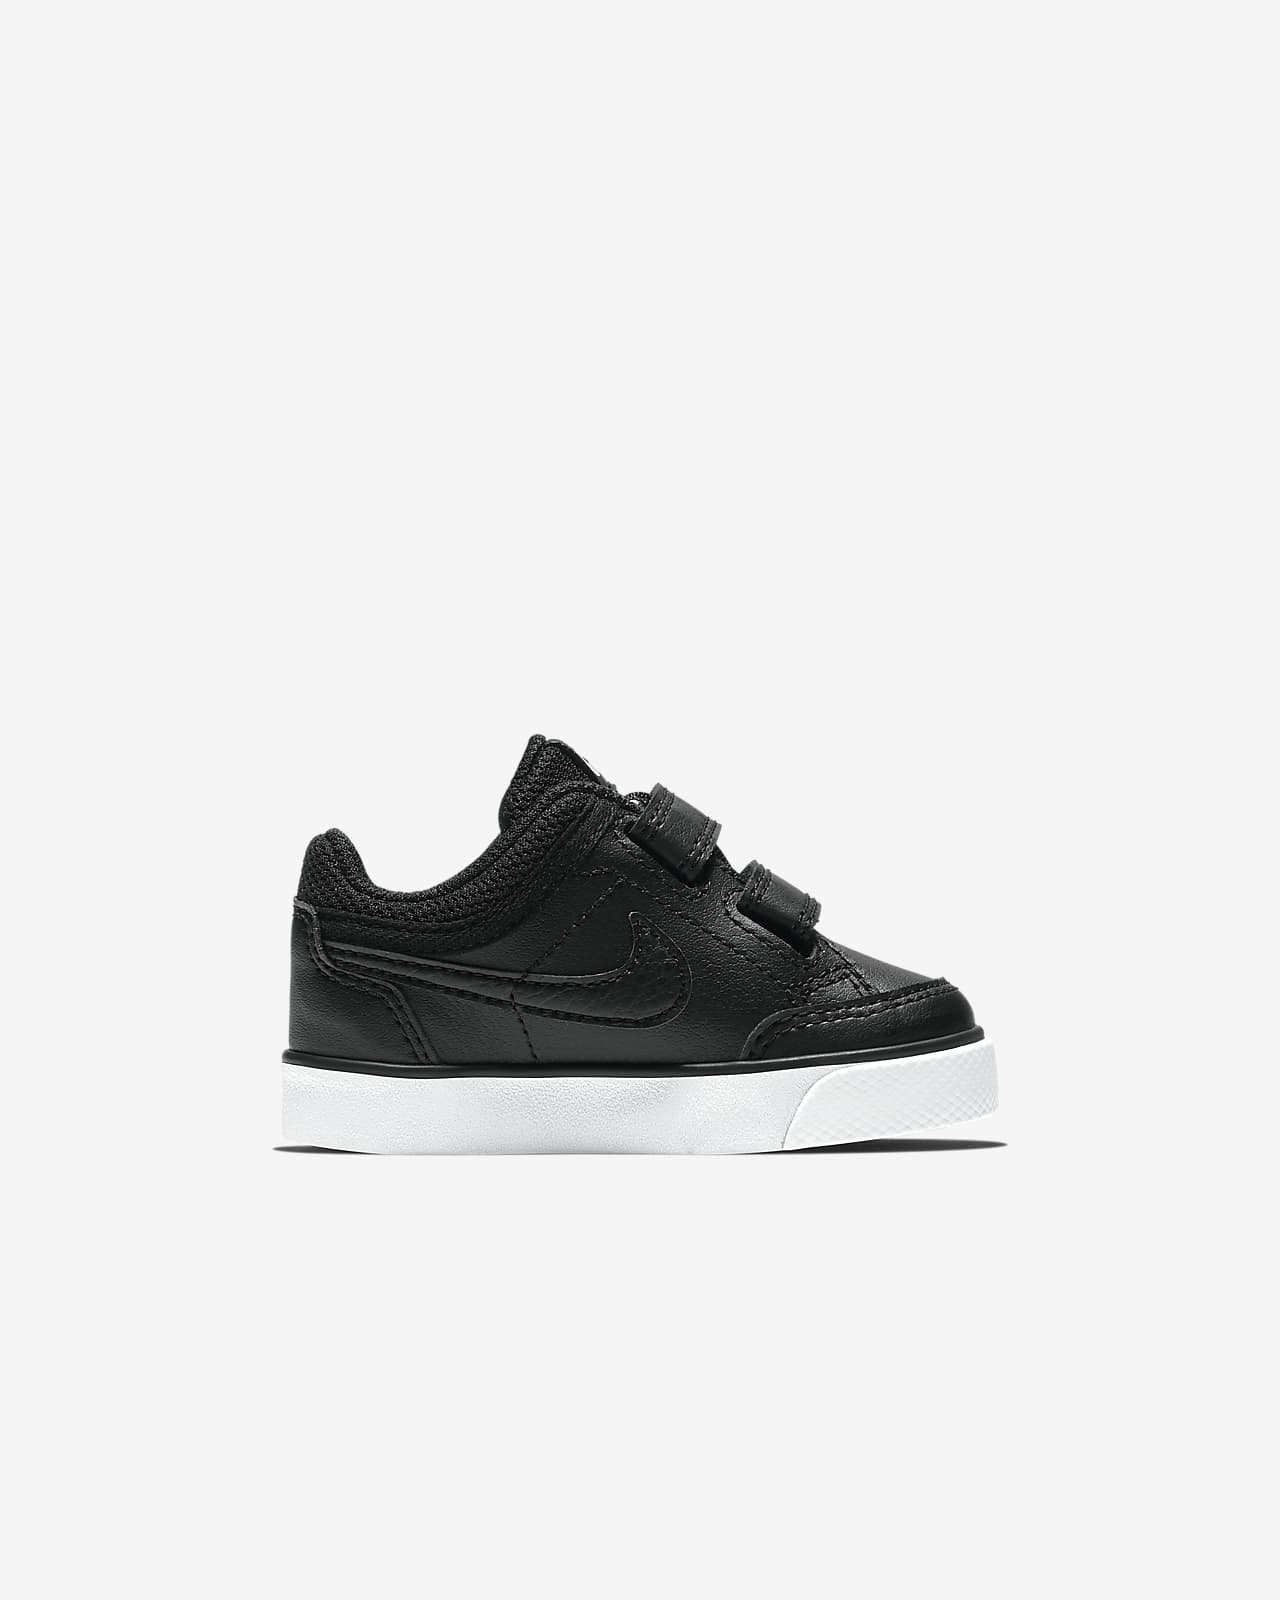 Nike Capri 3 LTR Baby/Toddler Shoe 